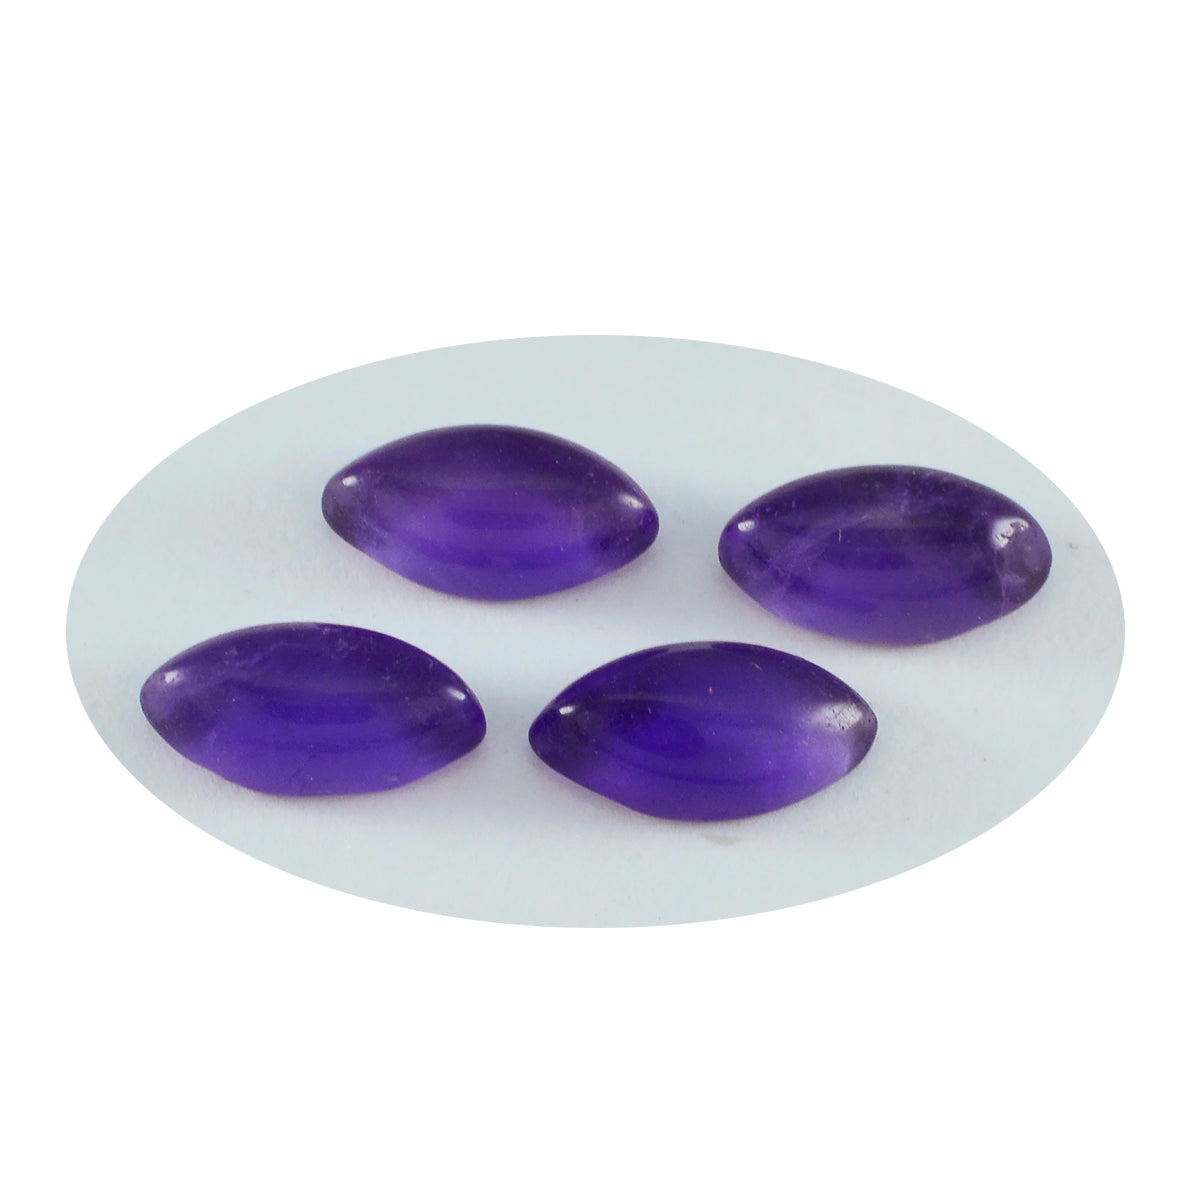 Riyogems 1 Stück lila Amethyst-Cabochon, 6 x 12 mm, Marquise-Form, süßer Qualitäts-Edelstein